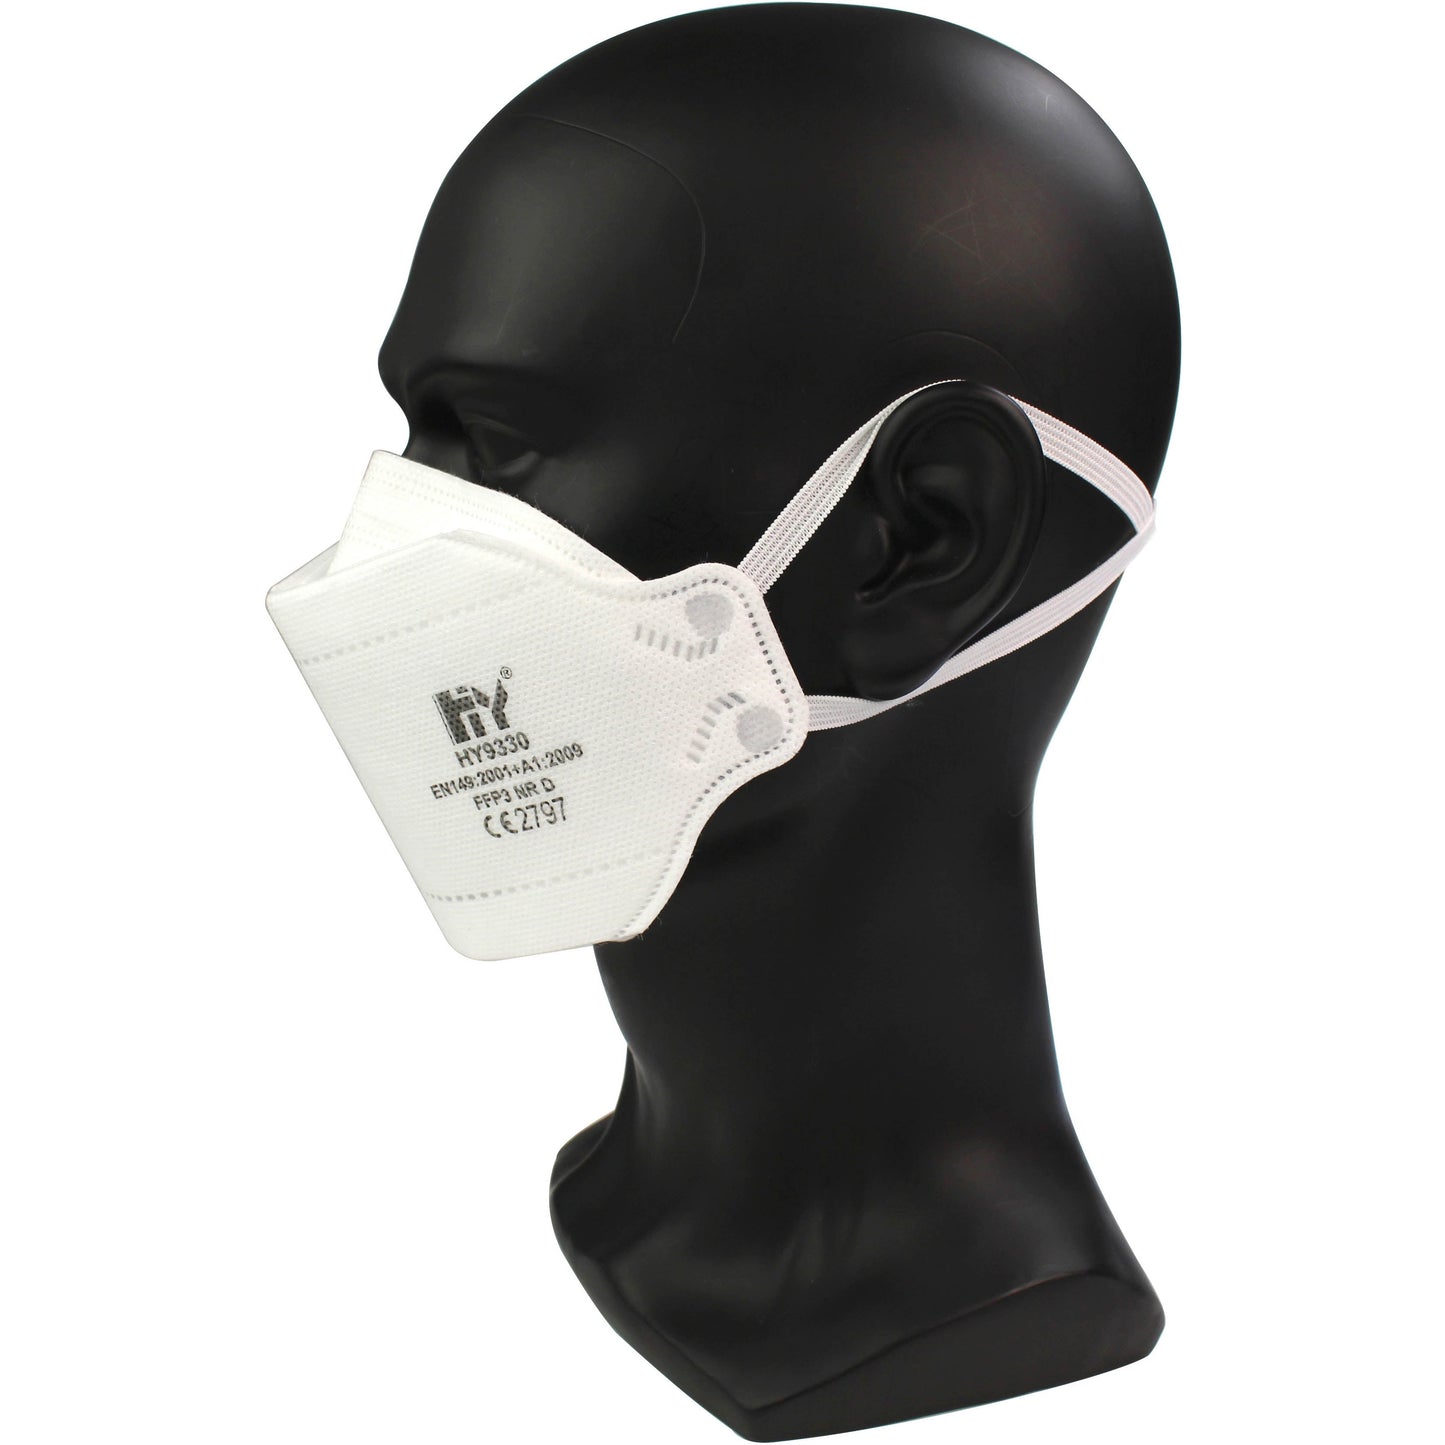 Handanhy FFP3 Face Masks - Box of 20